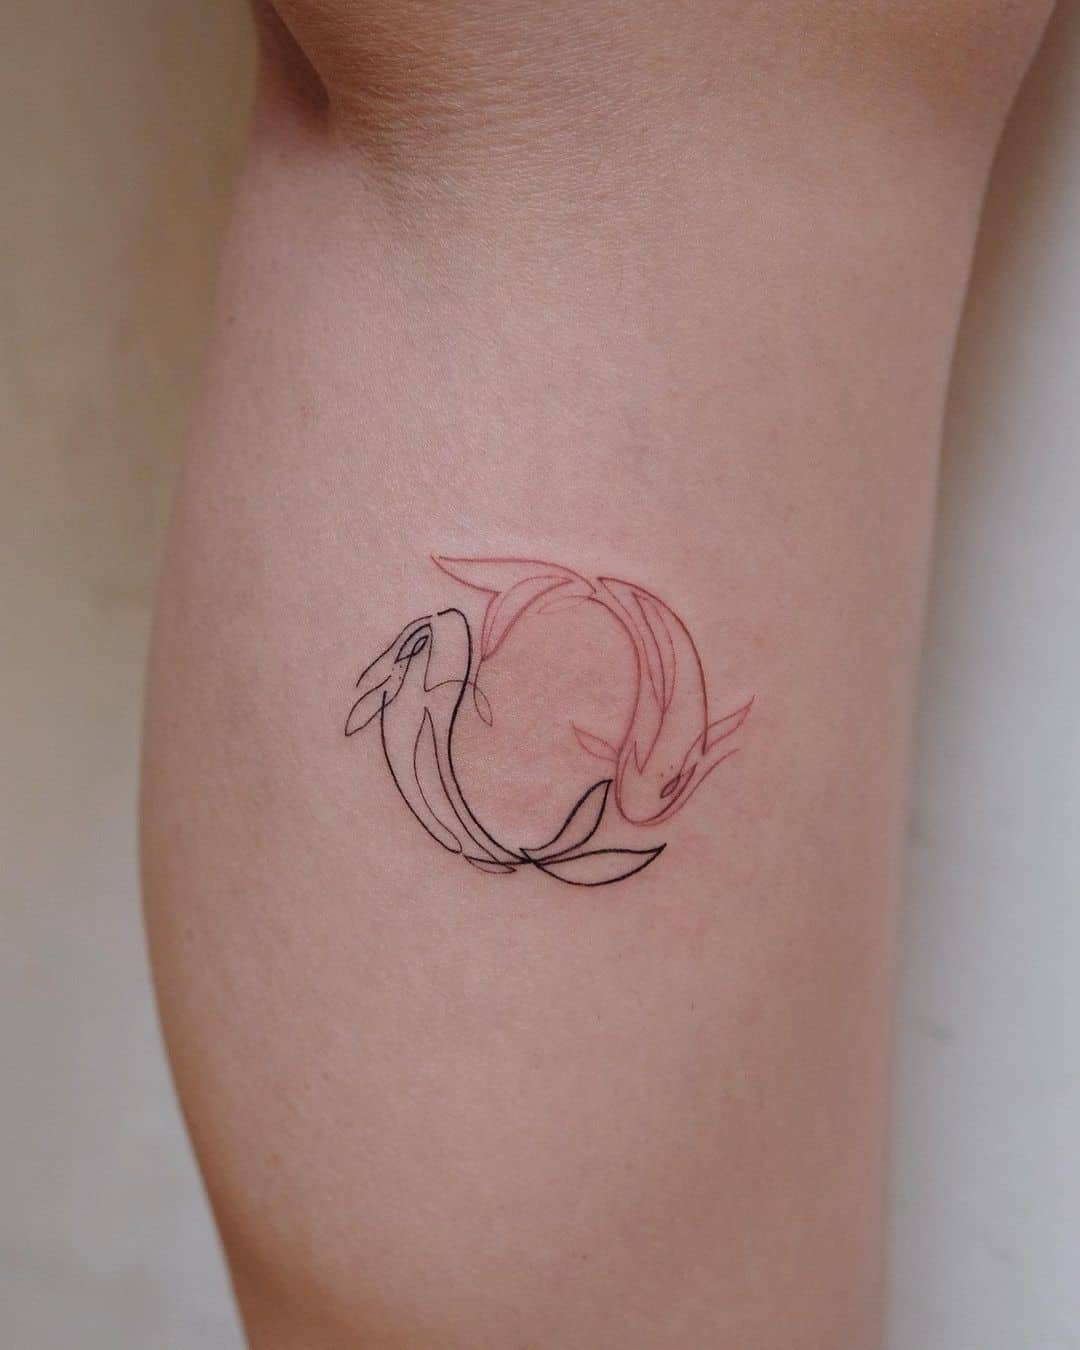 Simple tattoo of a koi fish